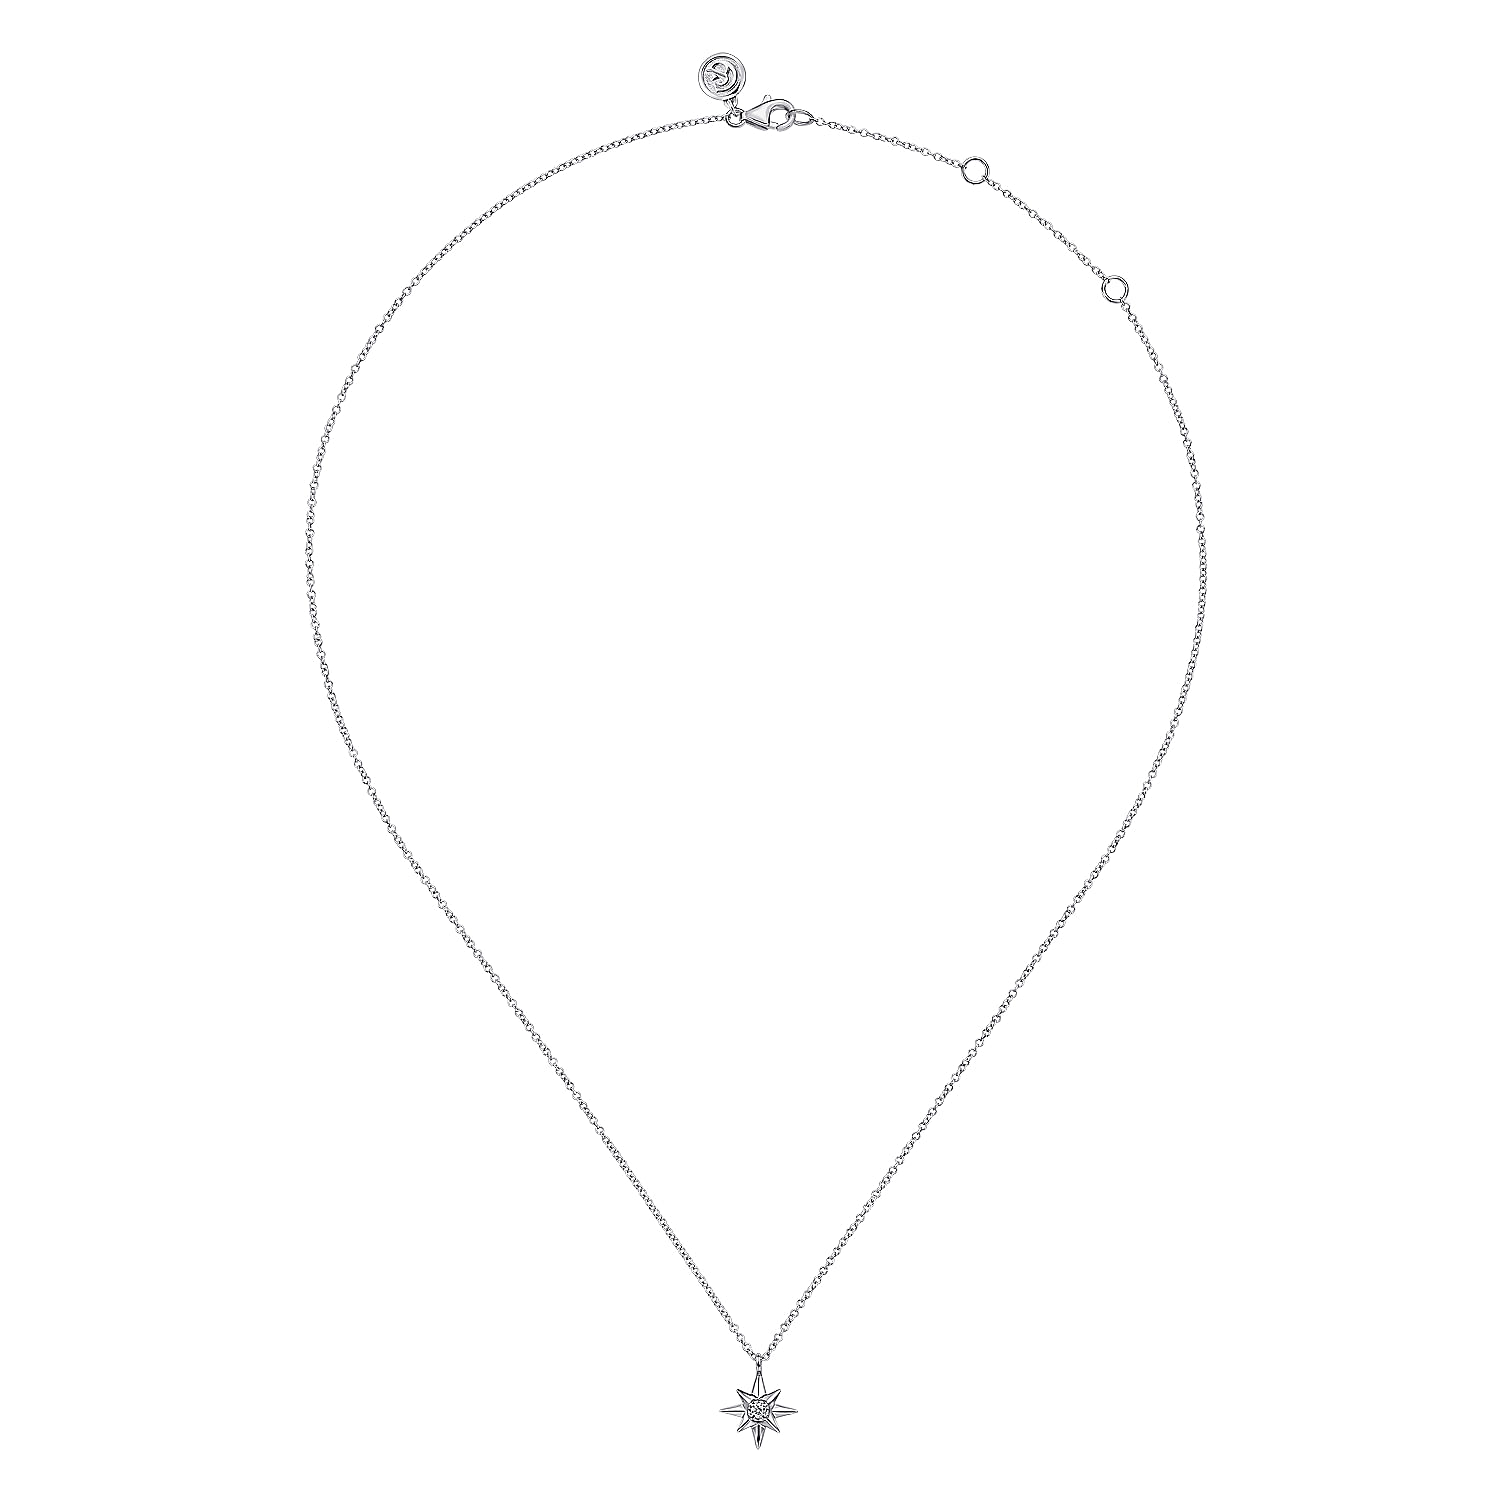 925 Sterling Silver Diamond Starburst Pendant Necklace